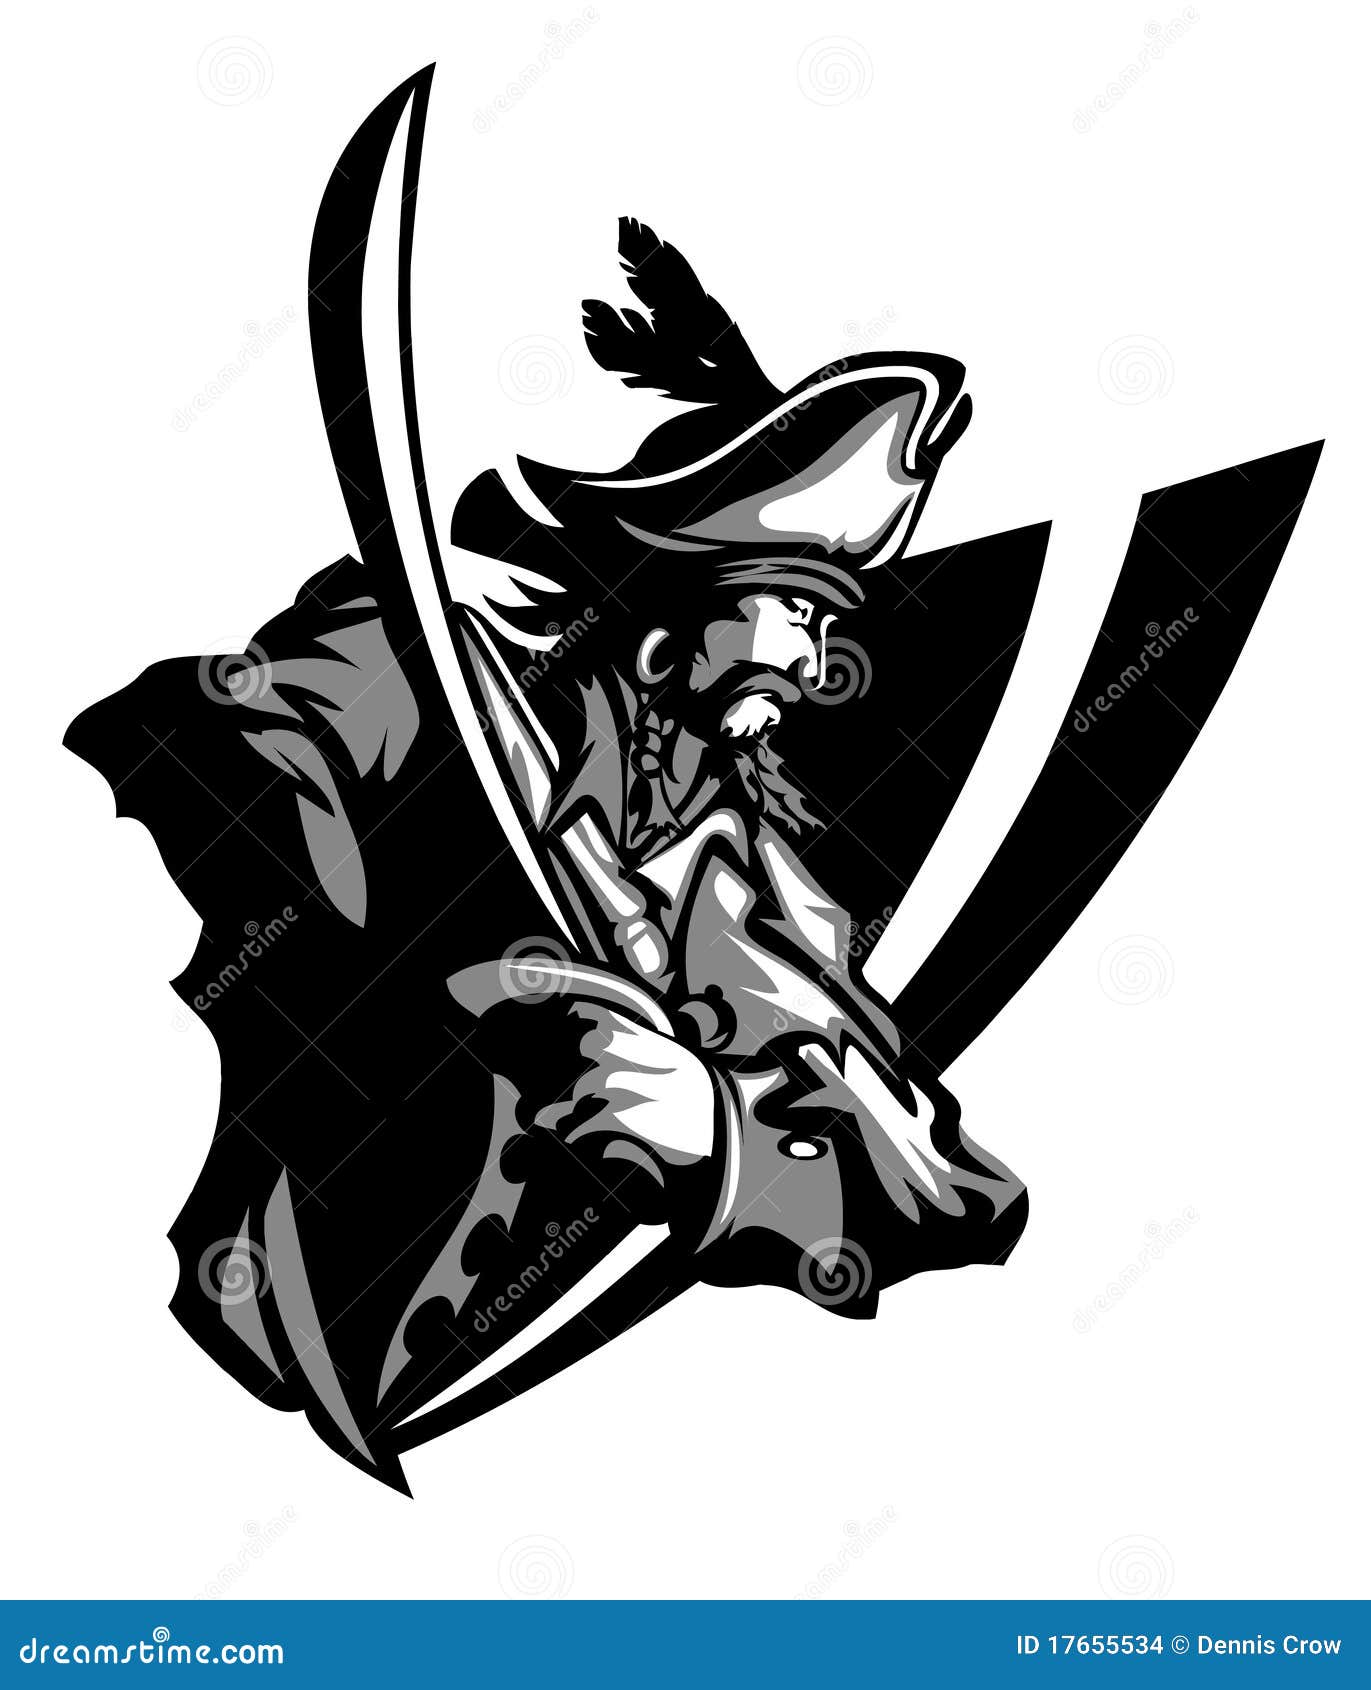 pirate-mascot-vector-logo-17655534.jpg